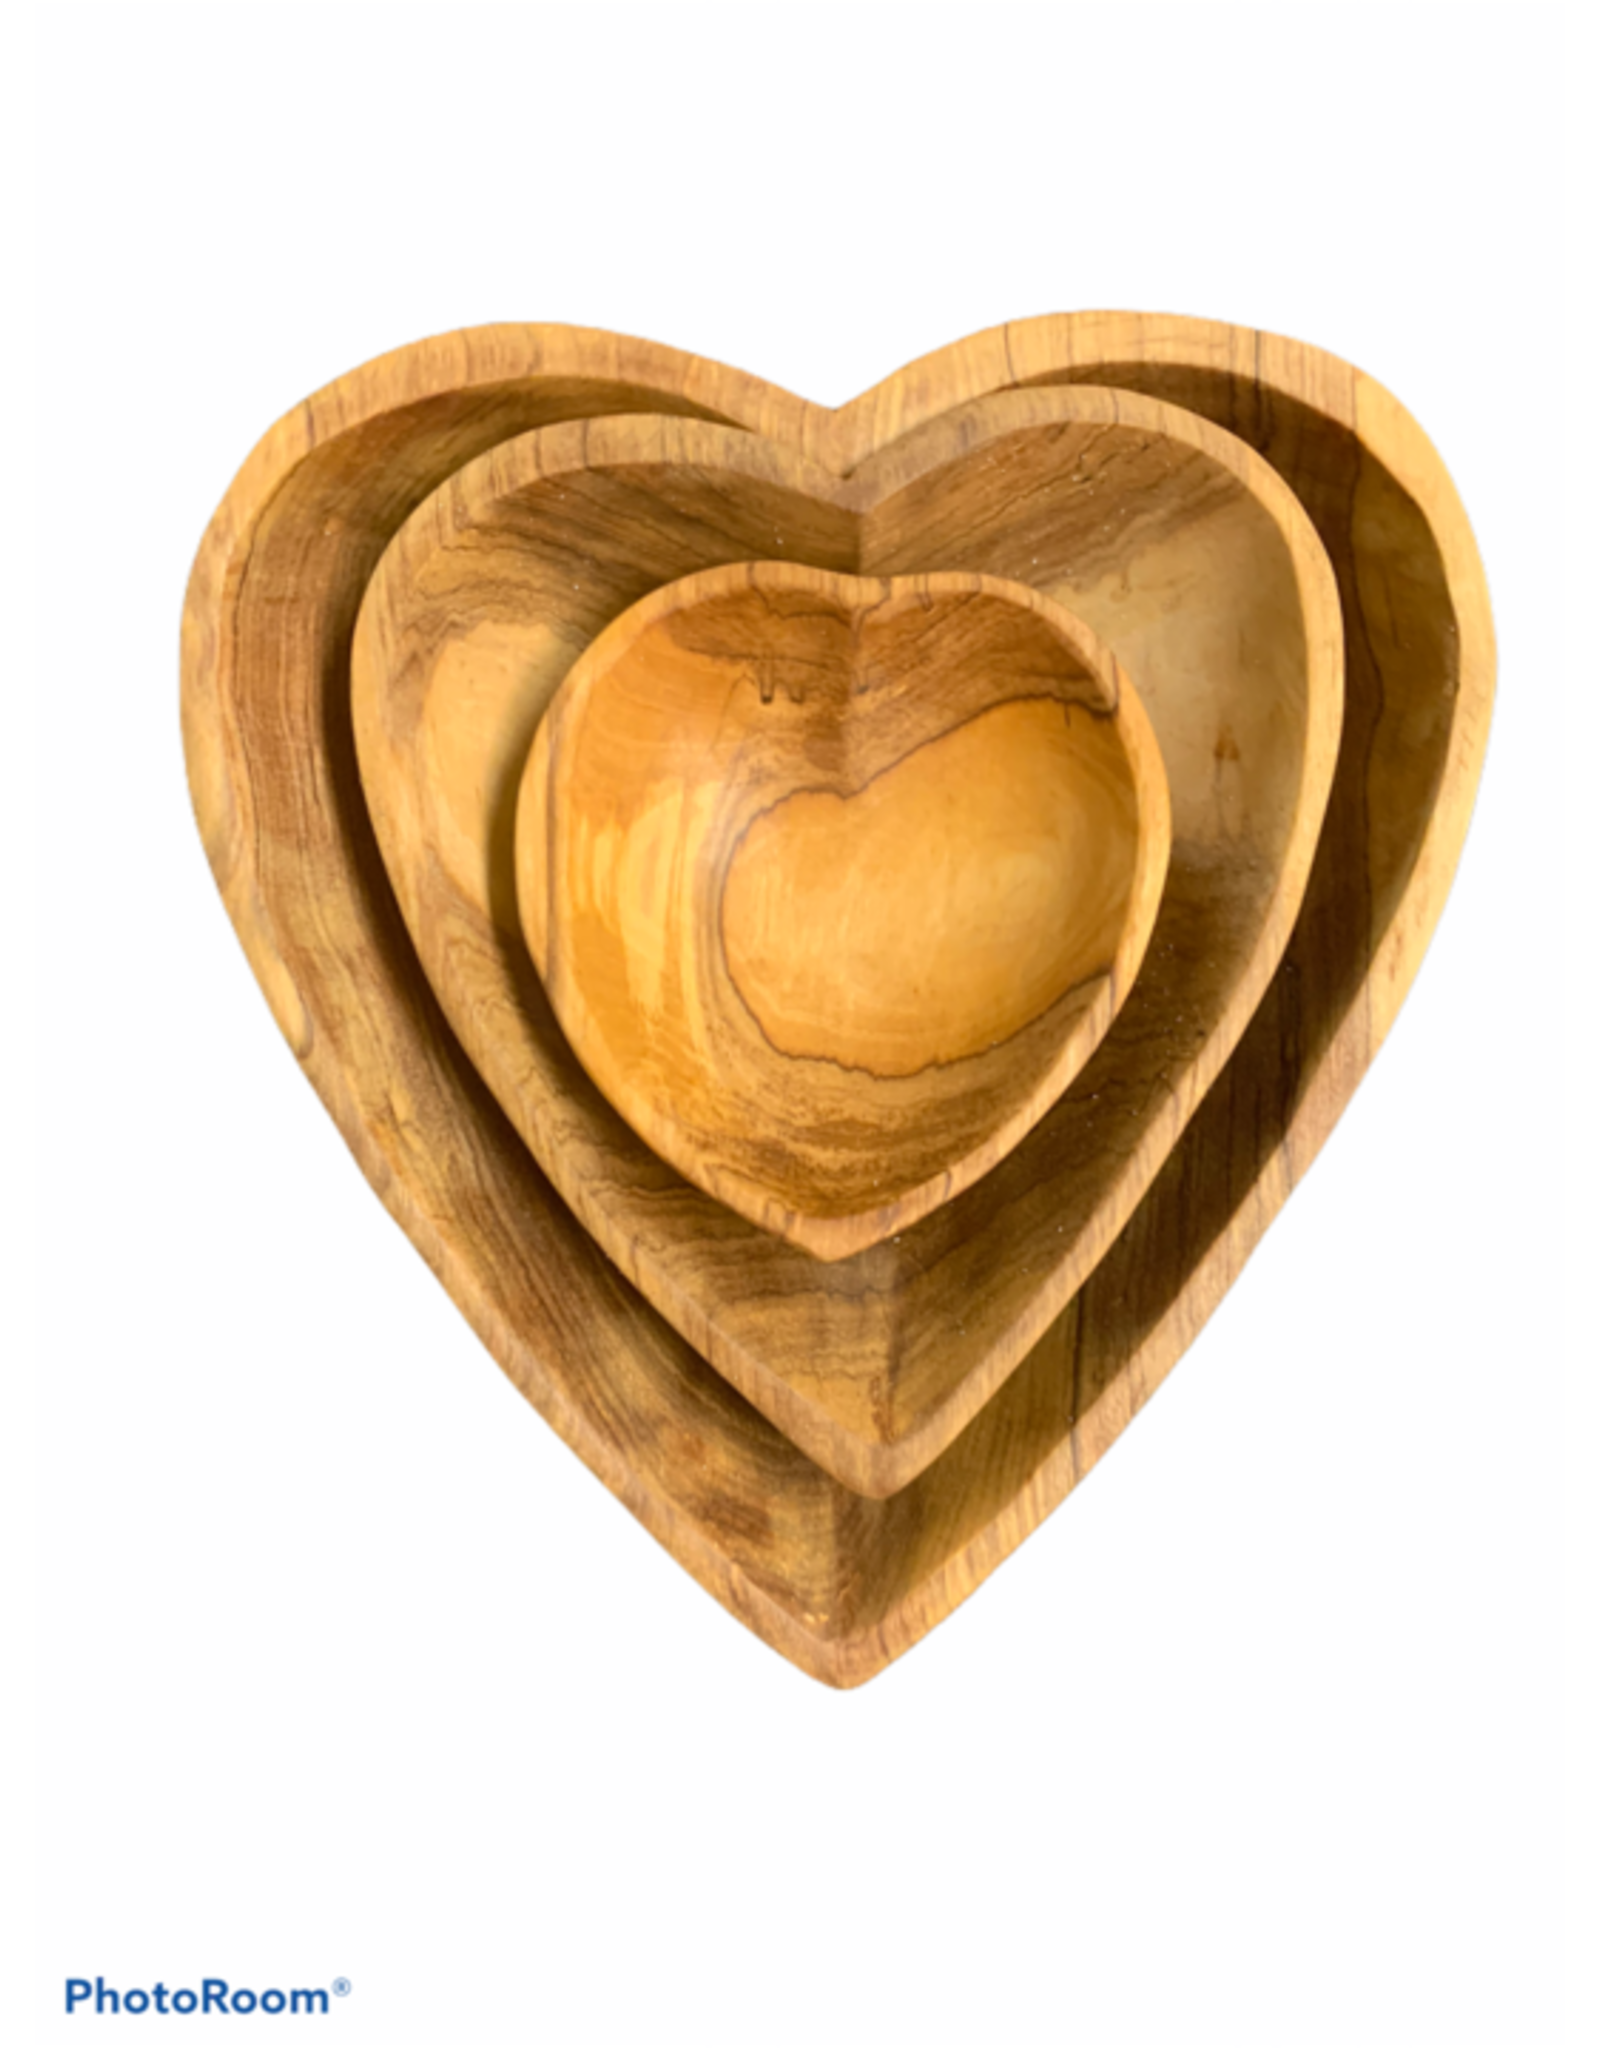 Olive Wood Heart Shaped Bowls